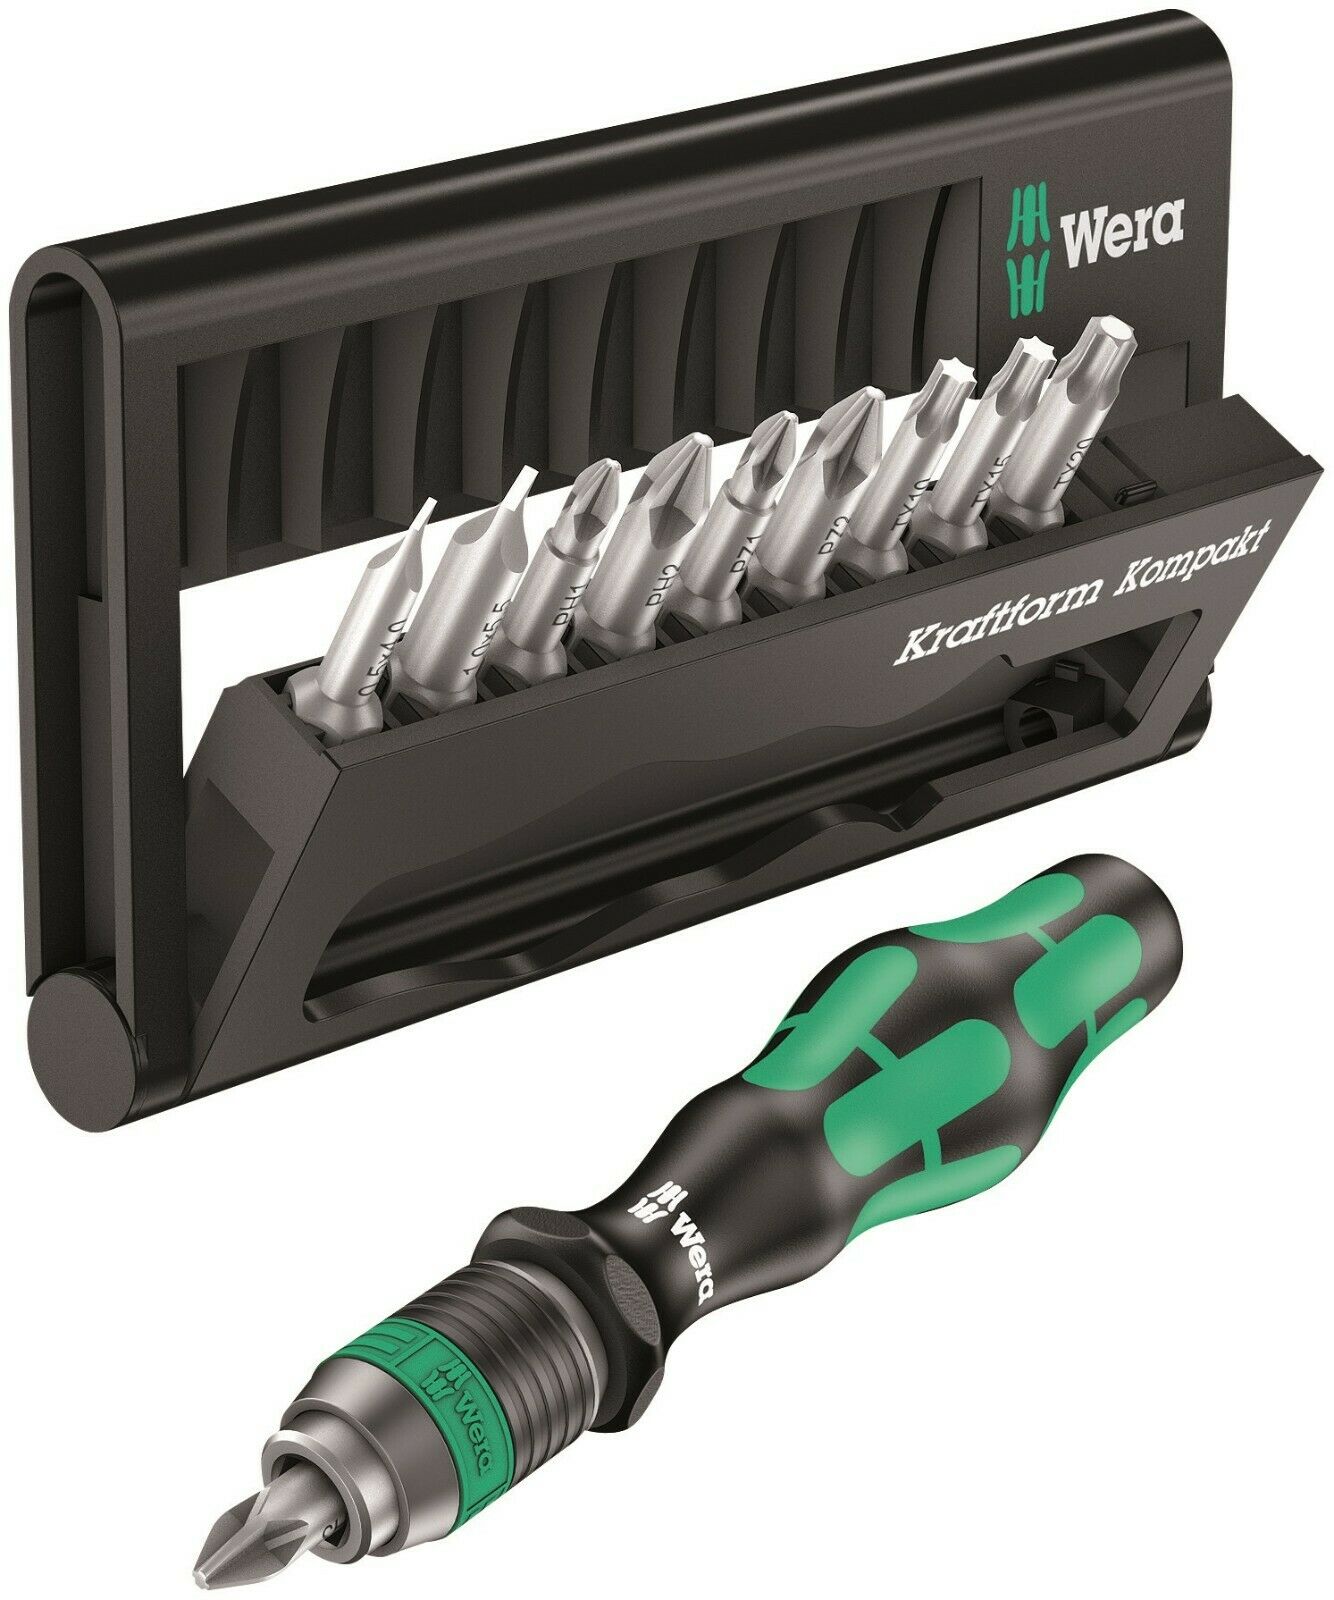 wera kraftform kompakt 10 screwdriver set 05056653001